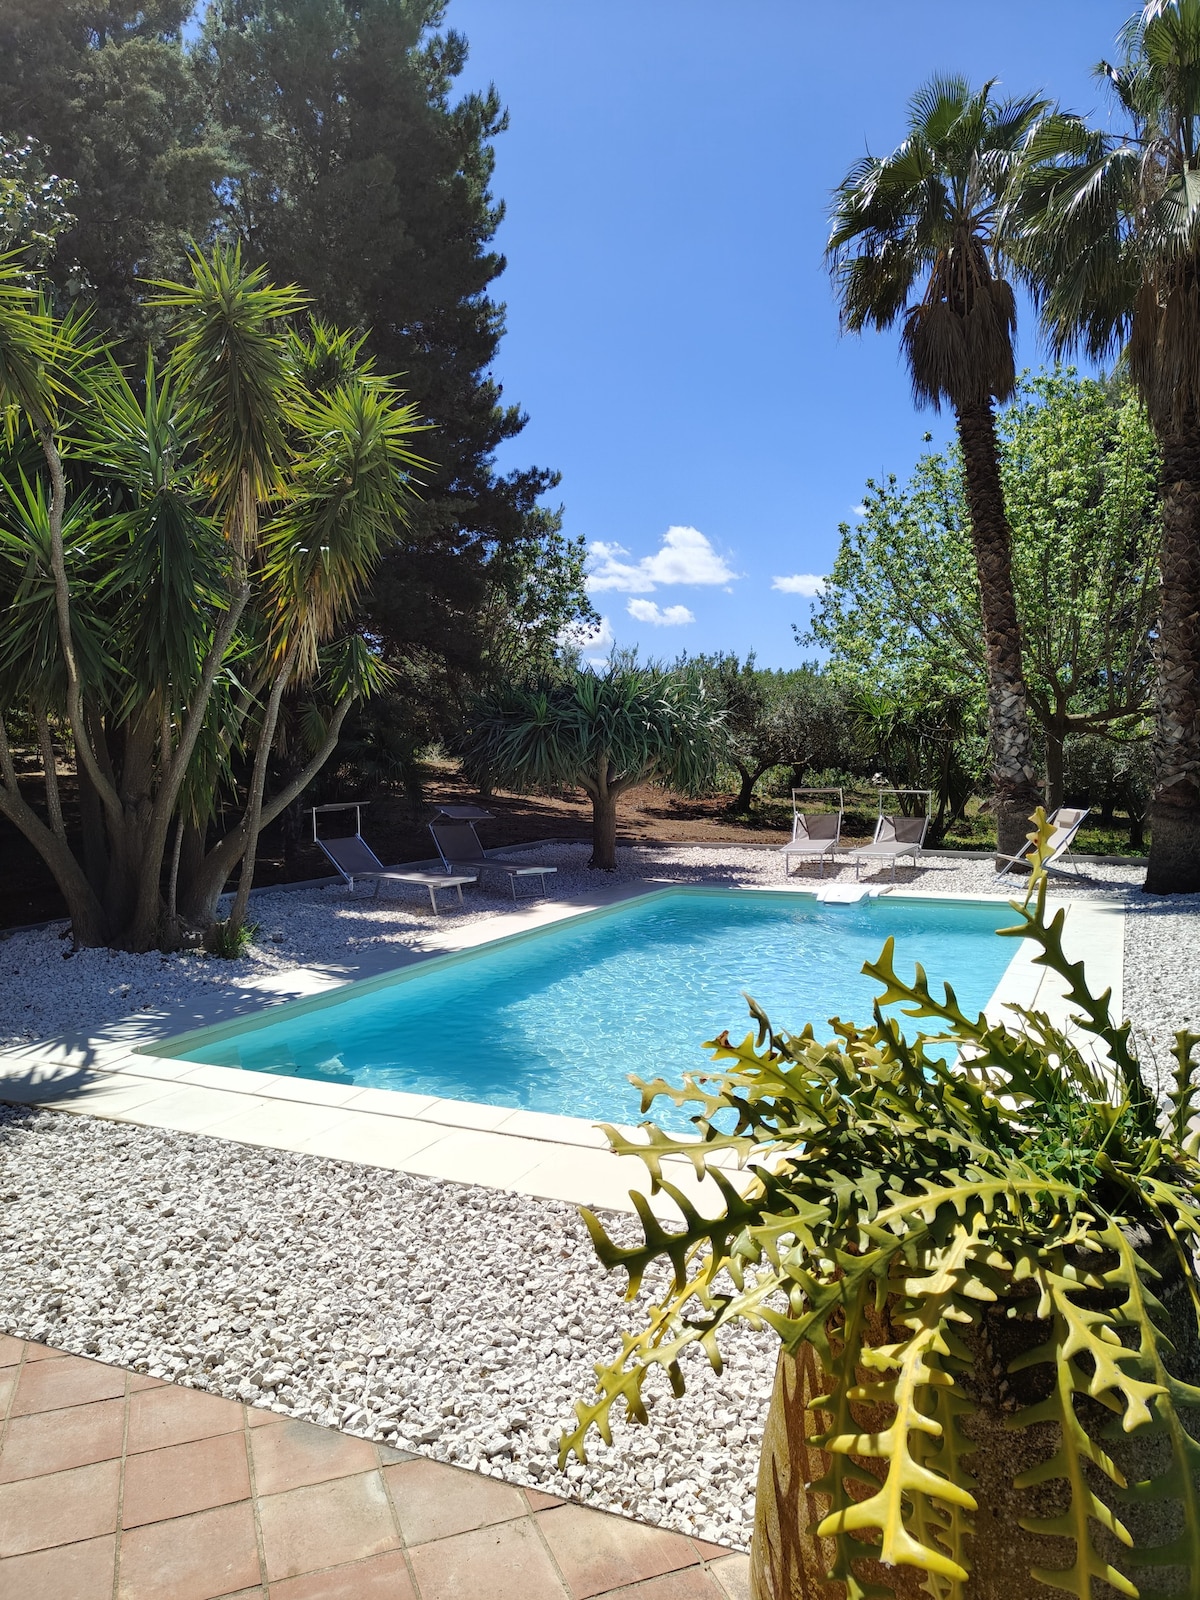 Cleo Villa Siciliana: villa con piscina vista mare